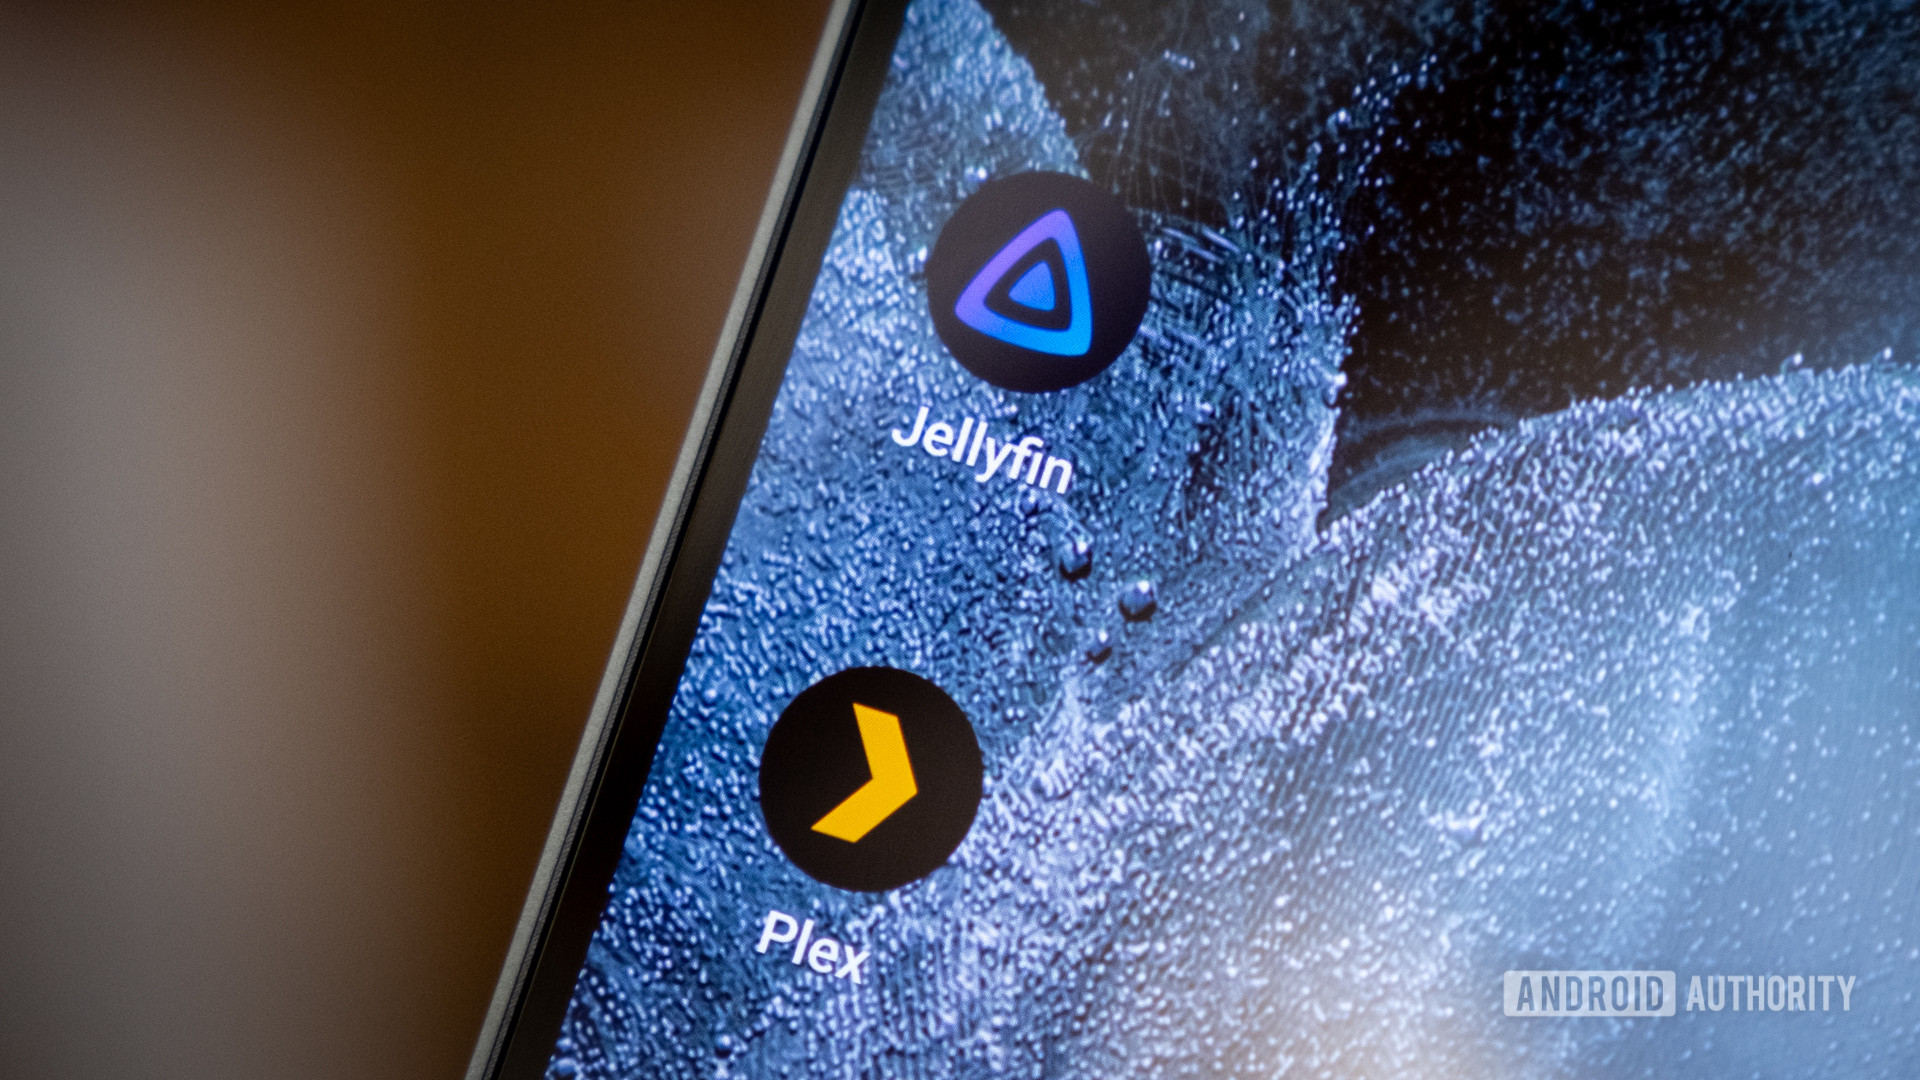 Jellyfin vs Plex app icons